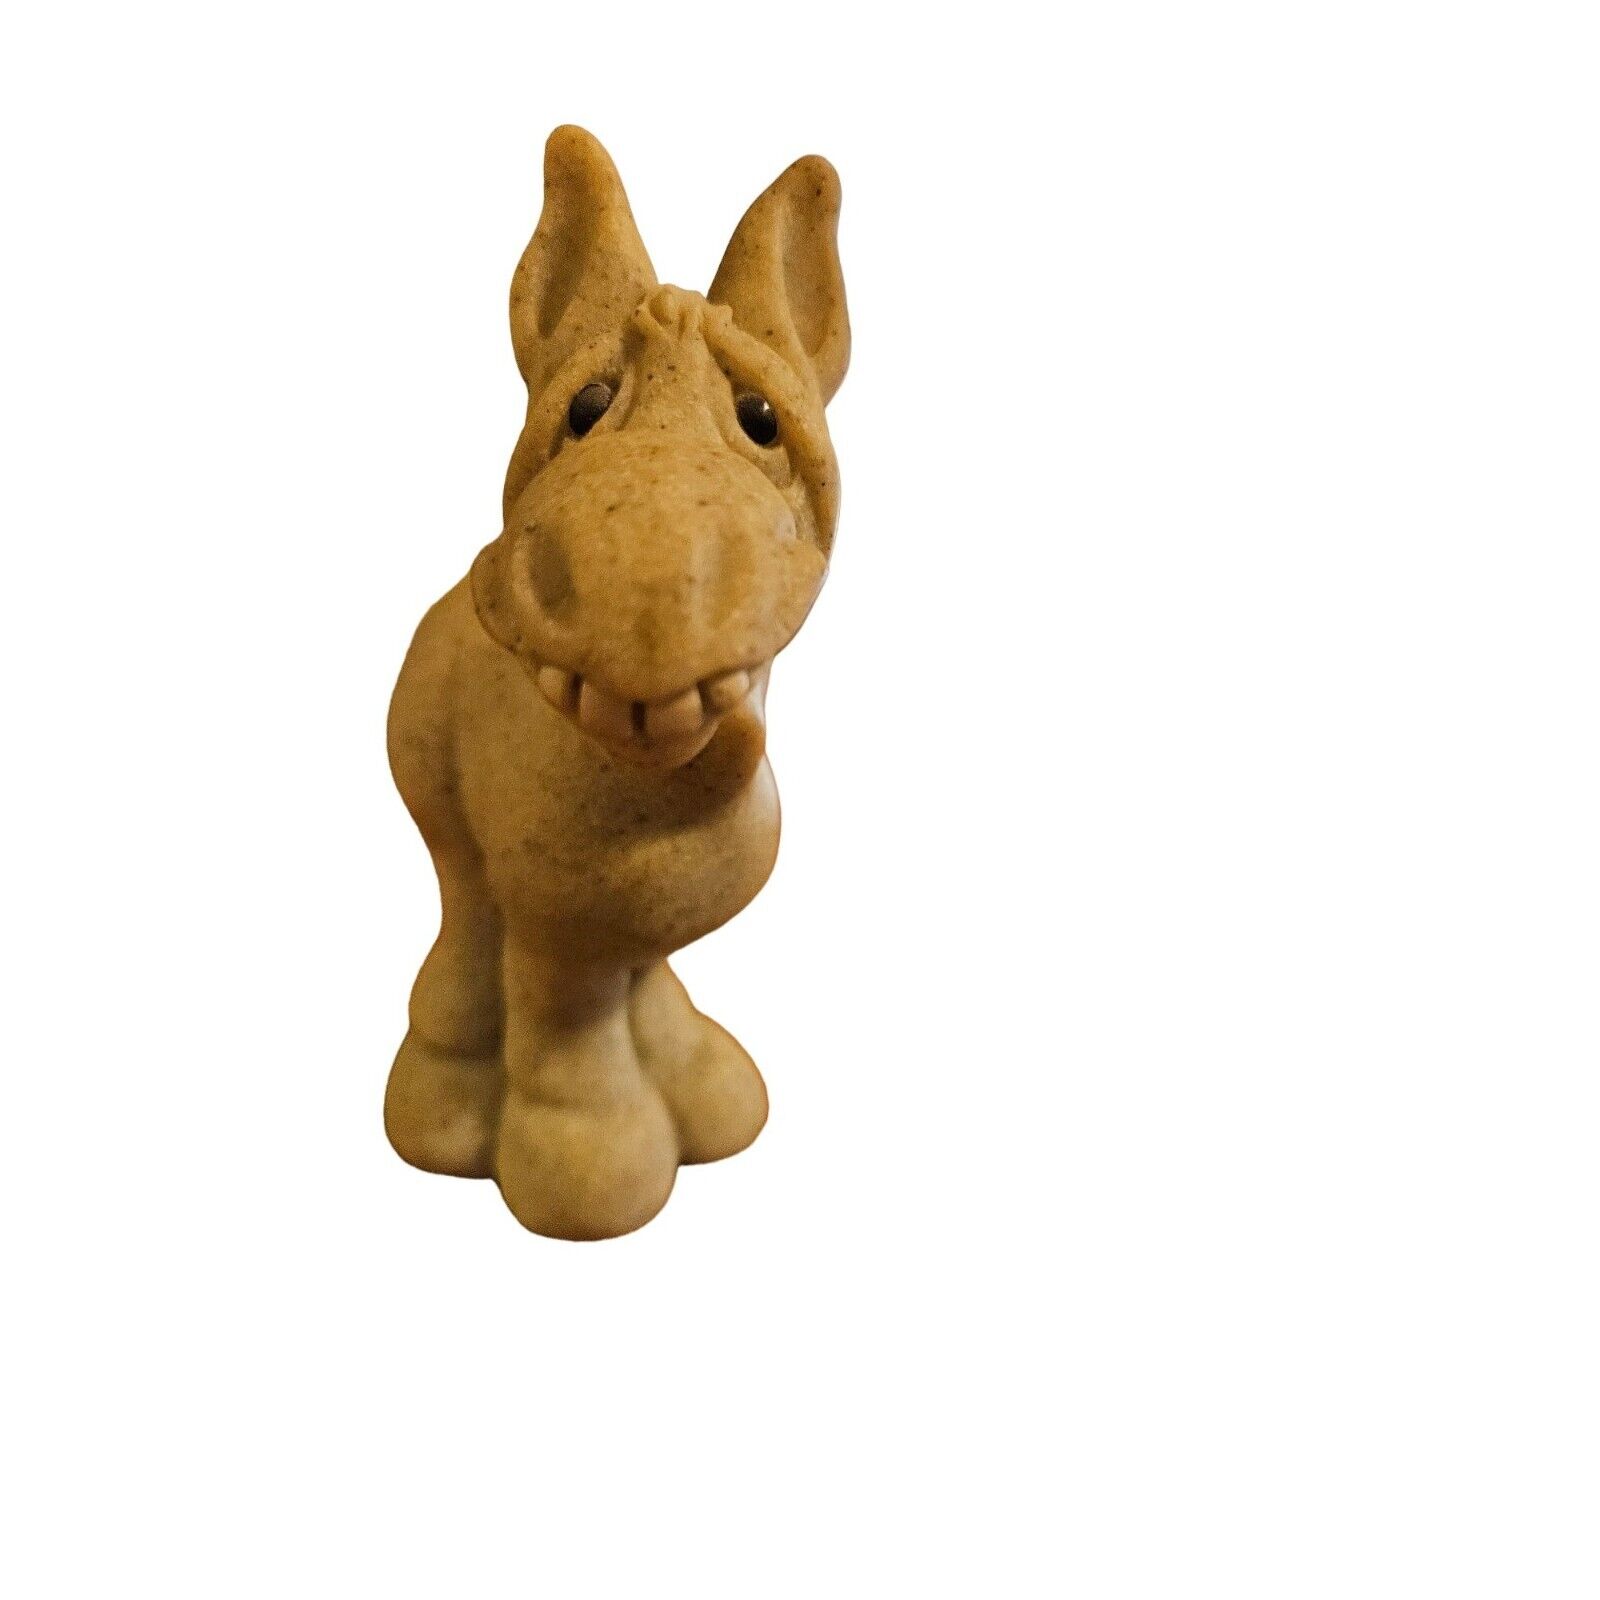 Quarry Critters Dingo Donkey 49006 Figurine Second Nature Design 2003 Adorable